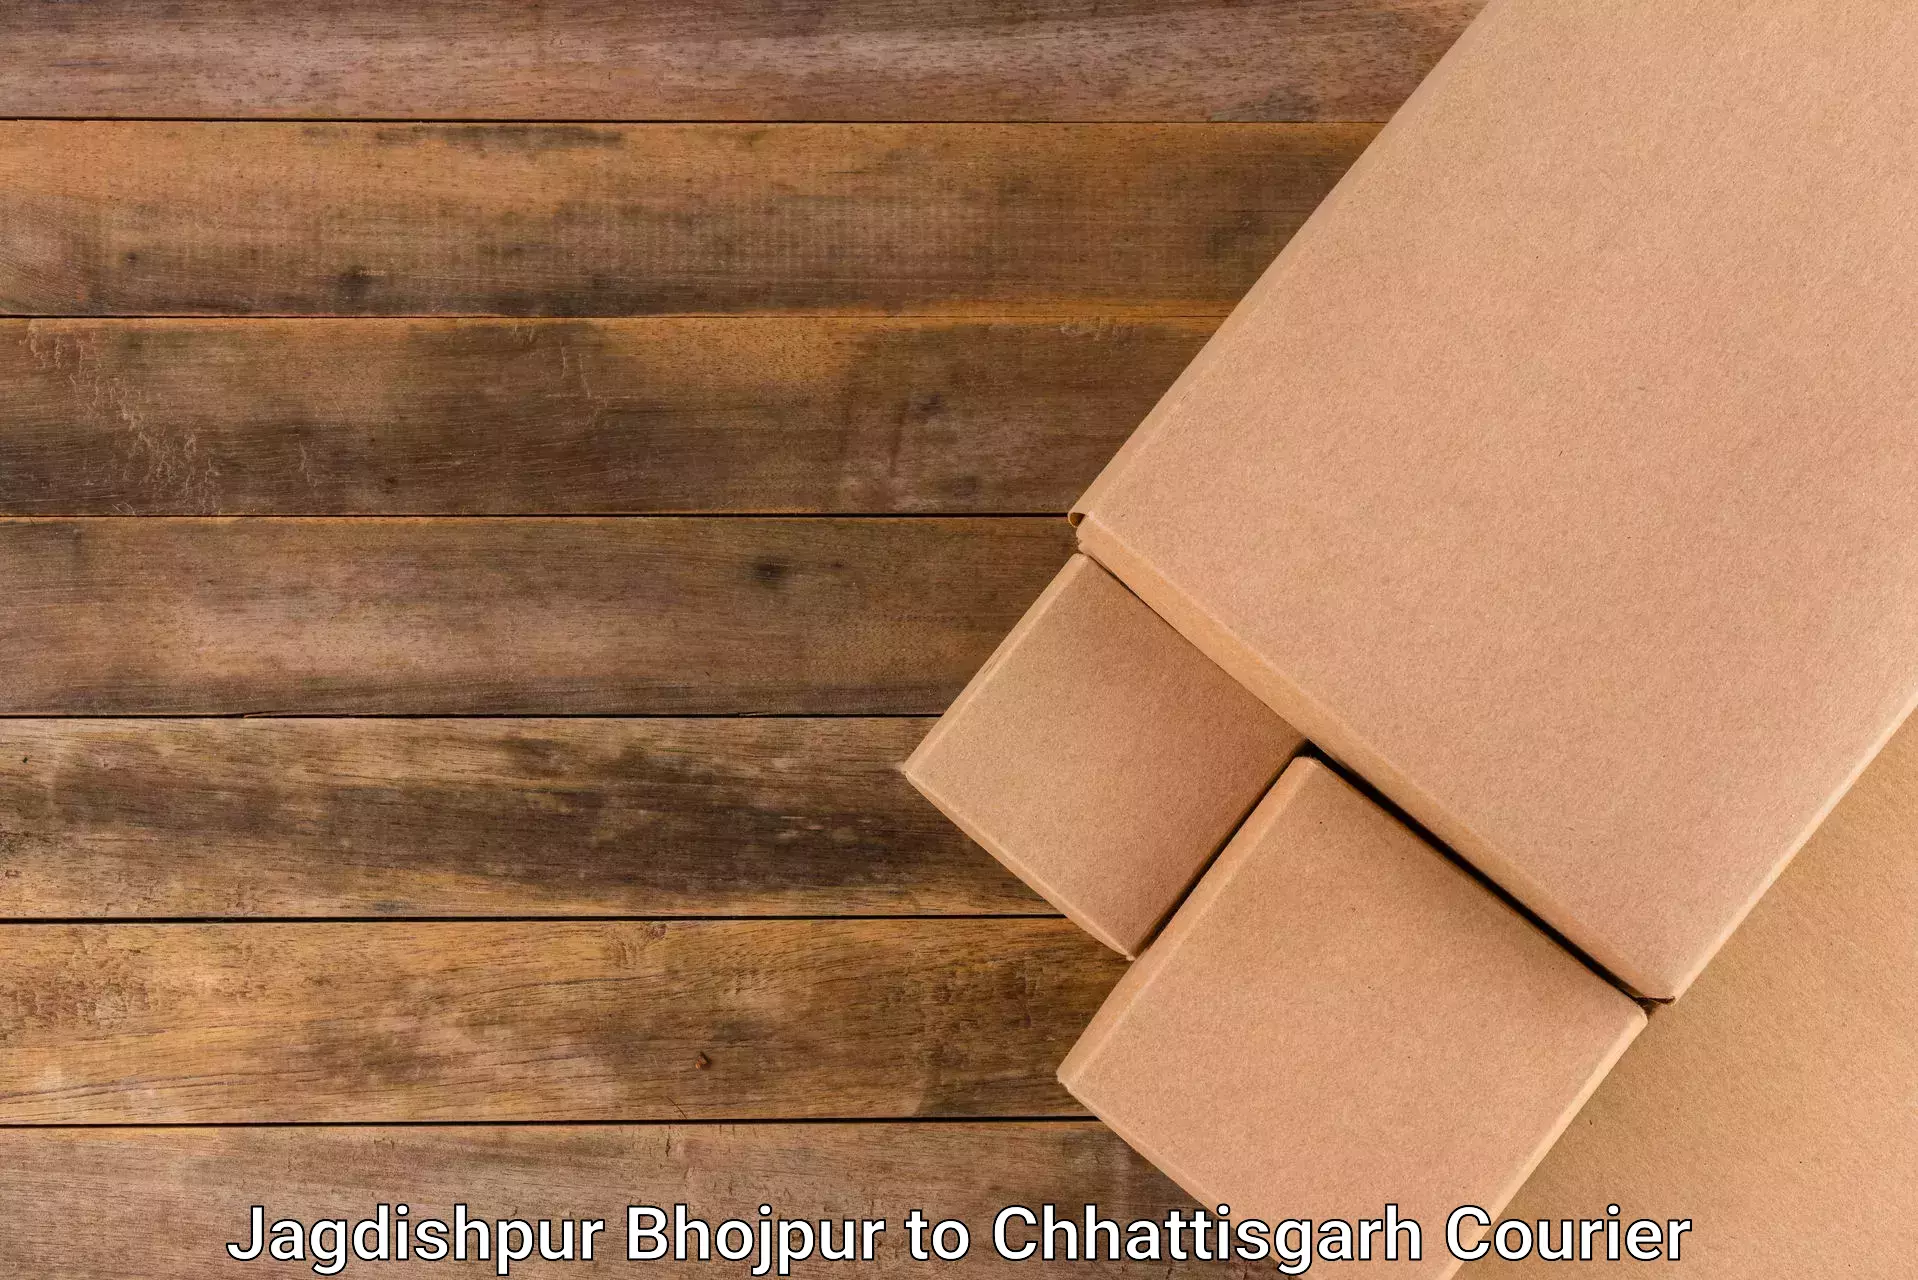 Nationwide delivery network Jagdishpur Bhojpur to Mahasamund